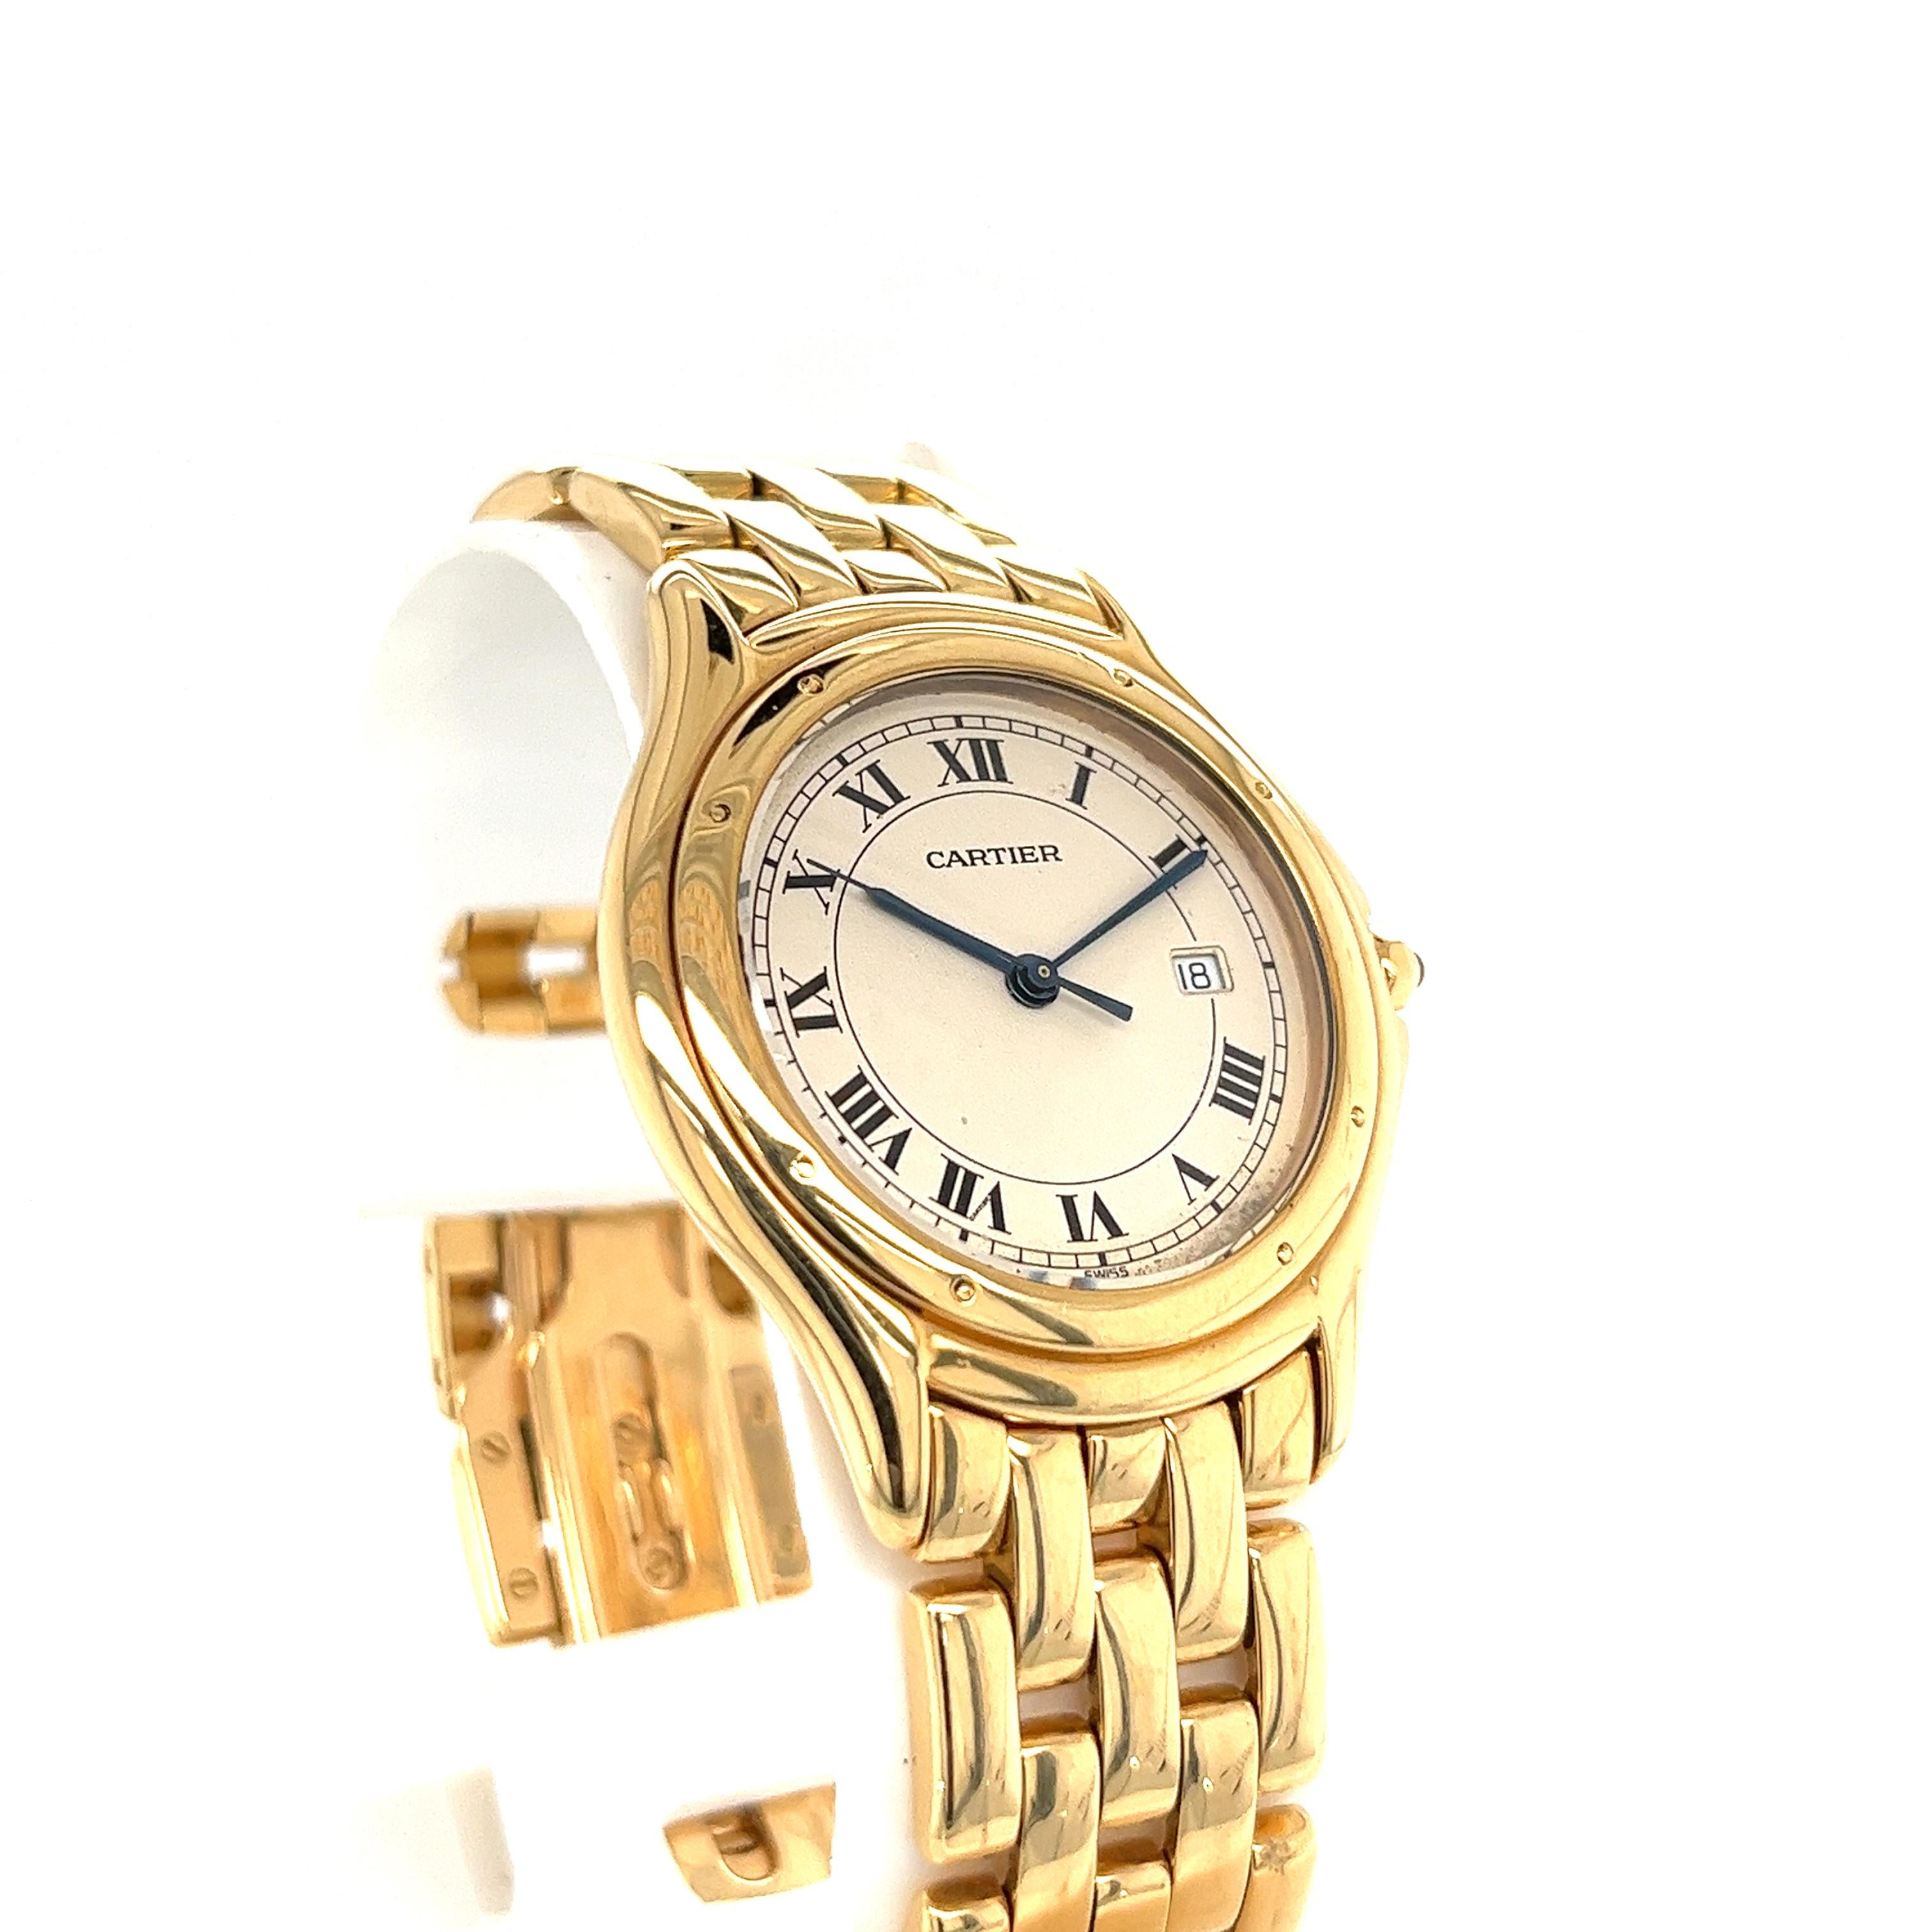 Modern Cartier Cougar 887904 in 18K Yellow Gold Midsize Unisex Watch